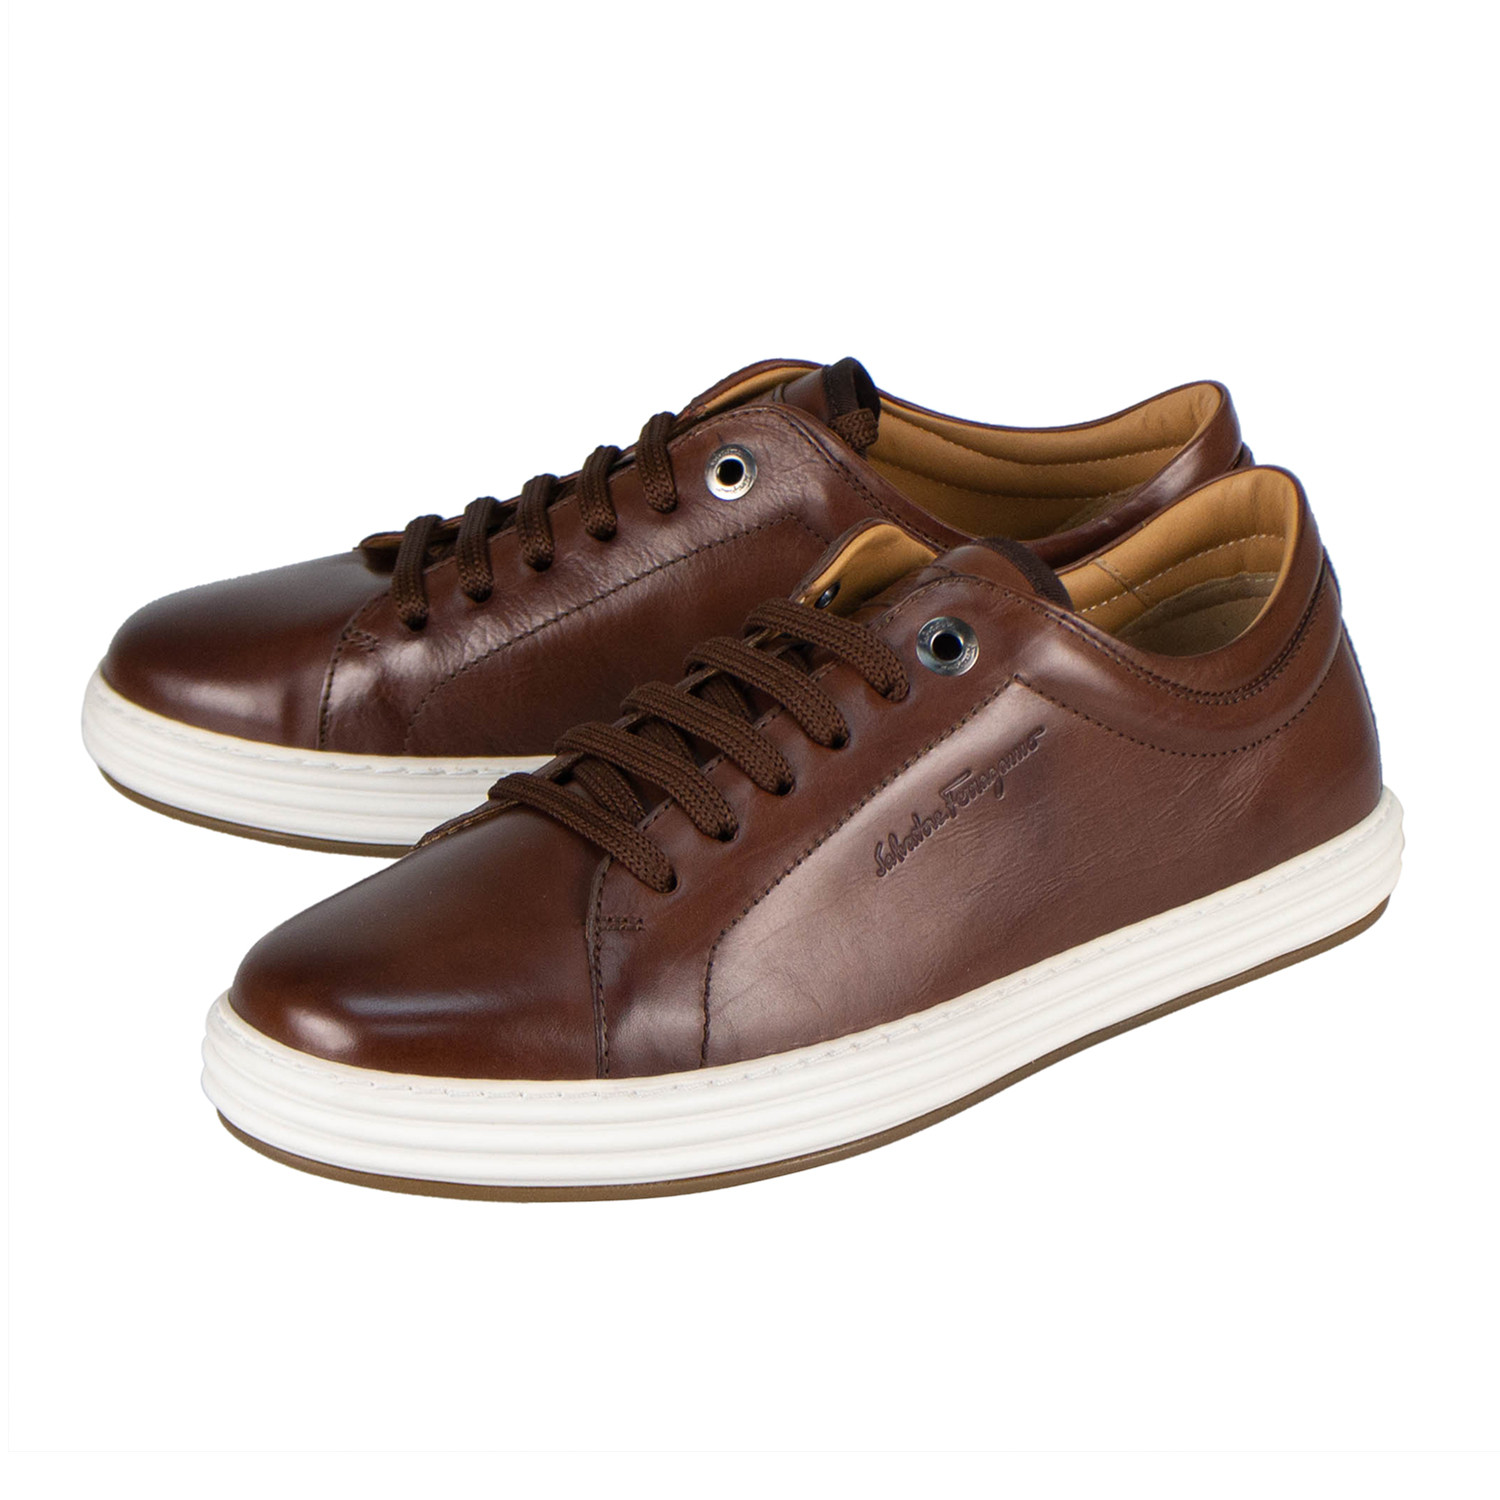 Salvatore Ferragamo Men's Low-top Leather Sneakers, Brand Size 5.5